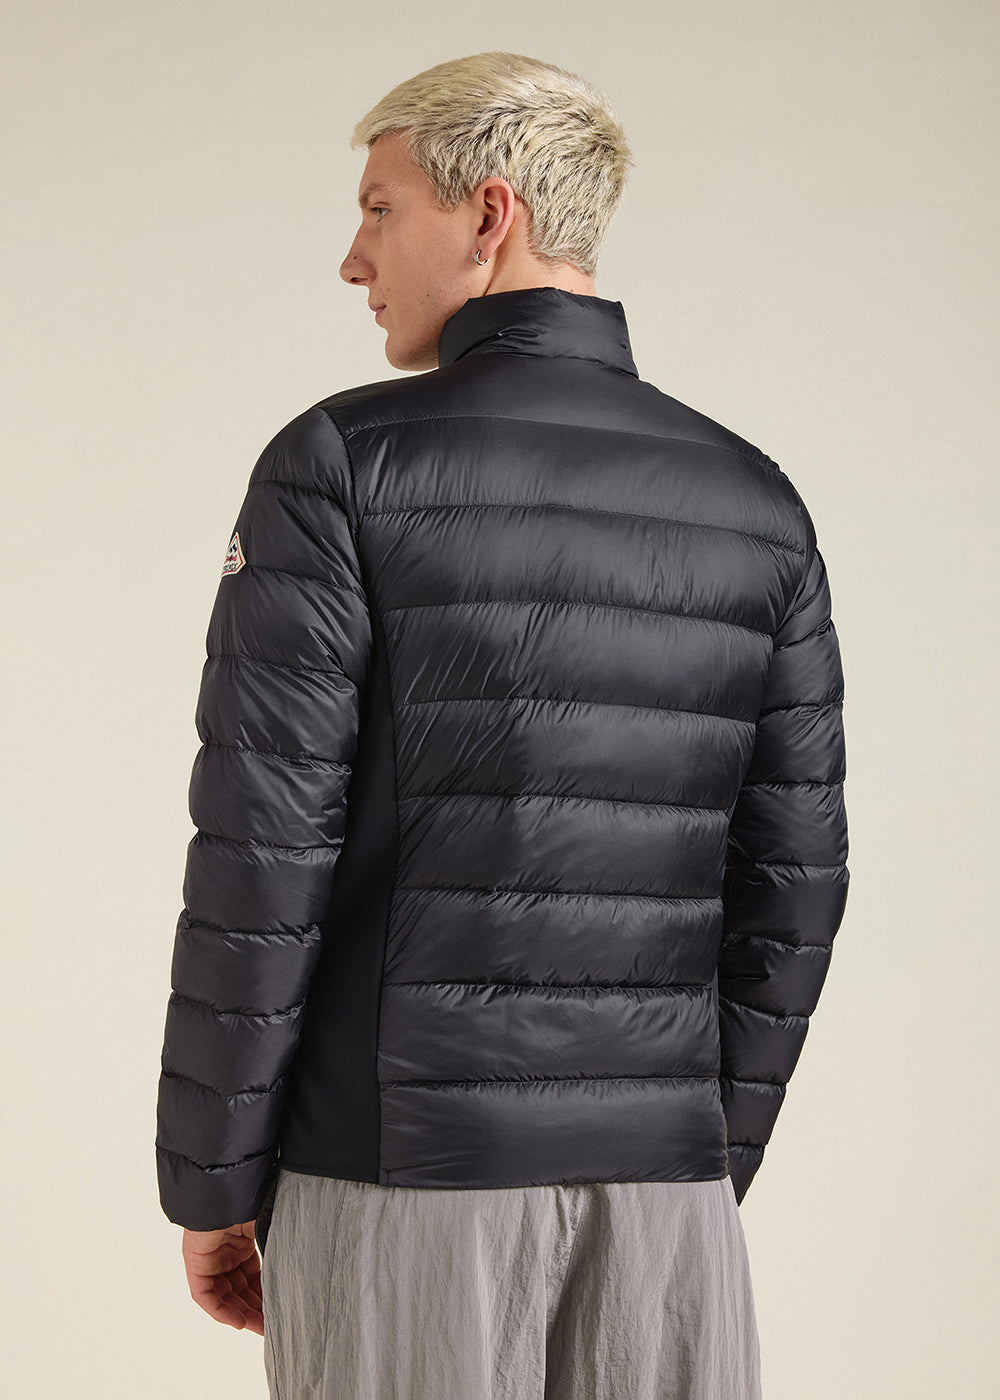 Men's Pyrenex Flow lighweight bi-fabric down jacket black-4